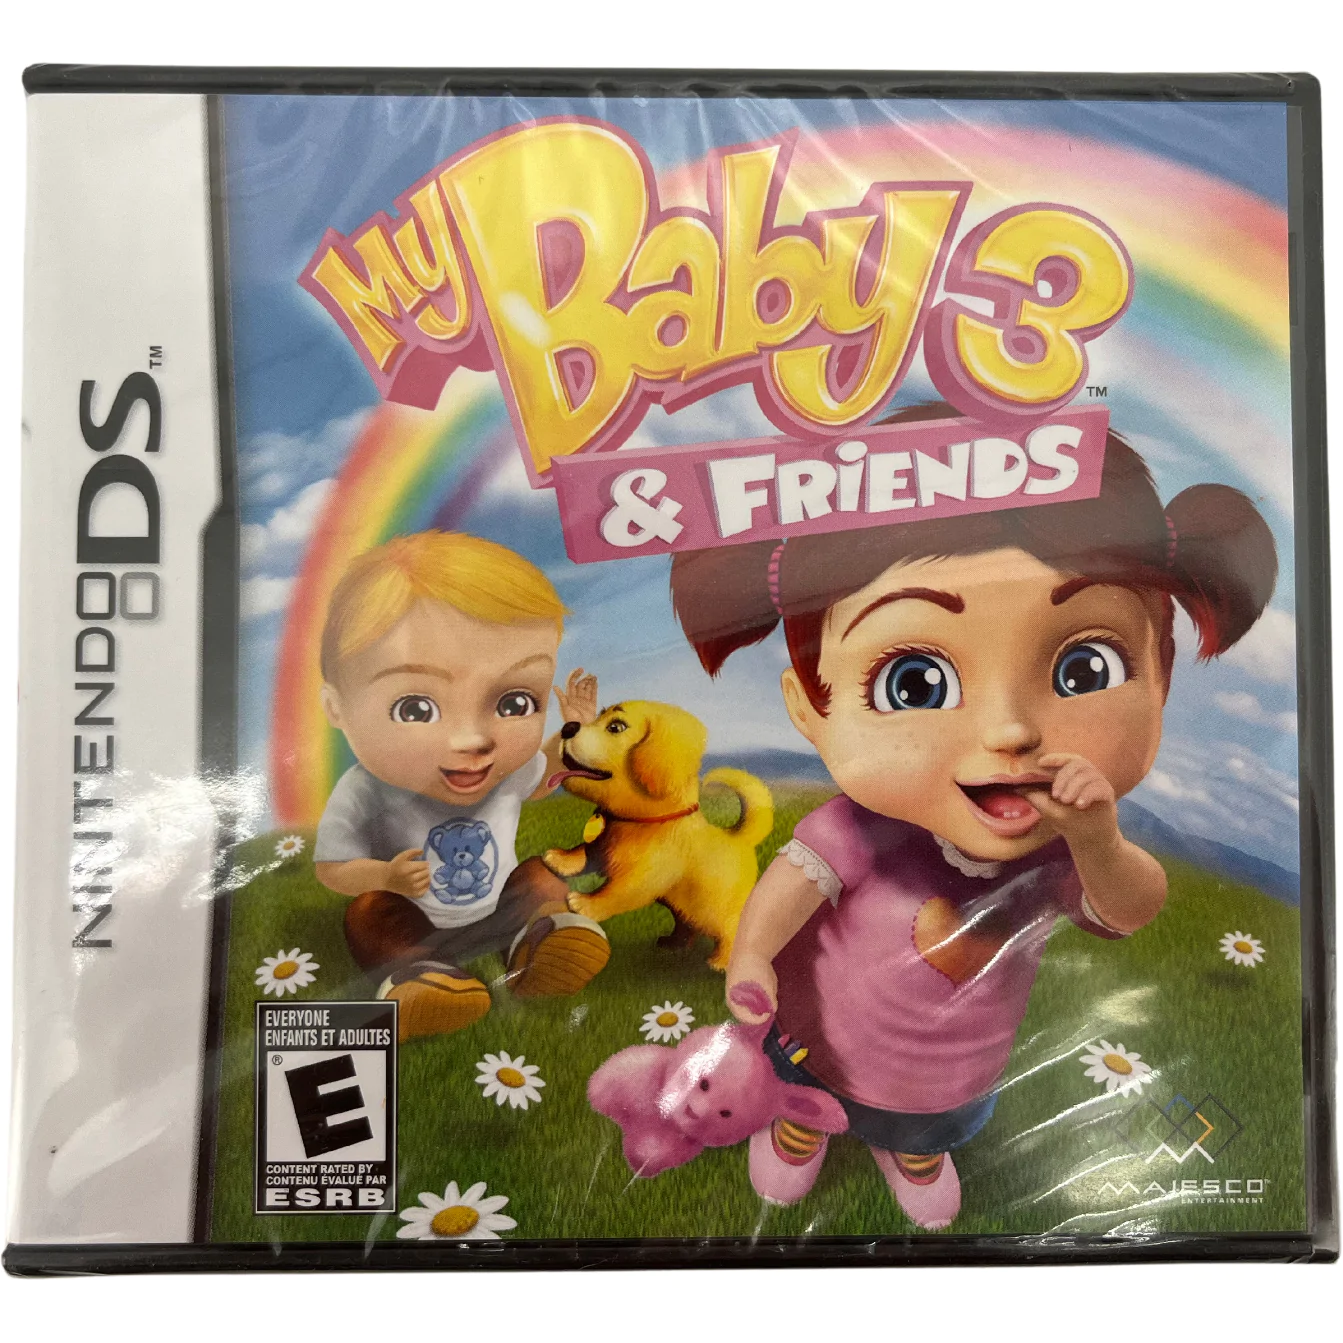 Nintendo DS "My Baby 3 & Friends" Video Game: Children's Video Game